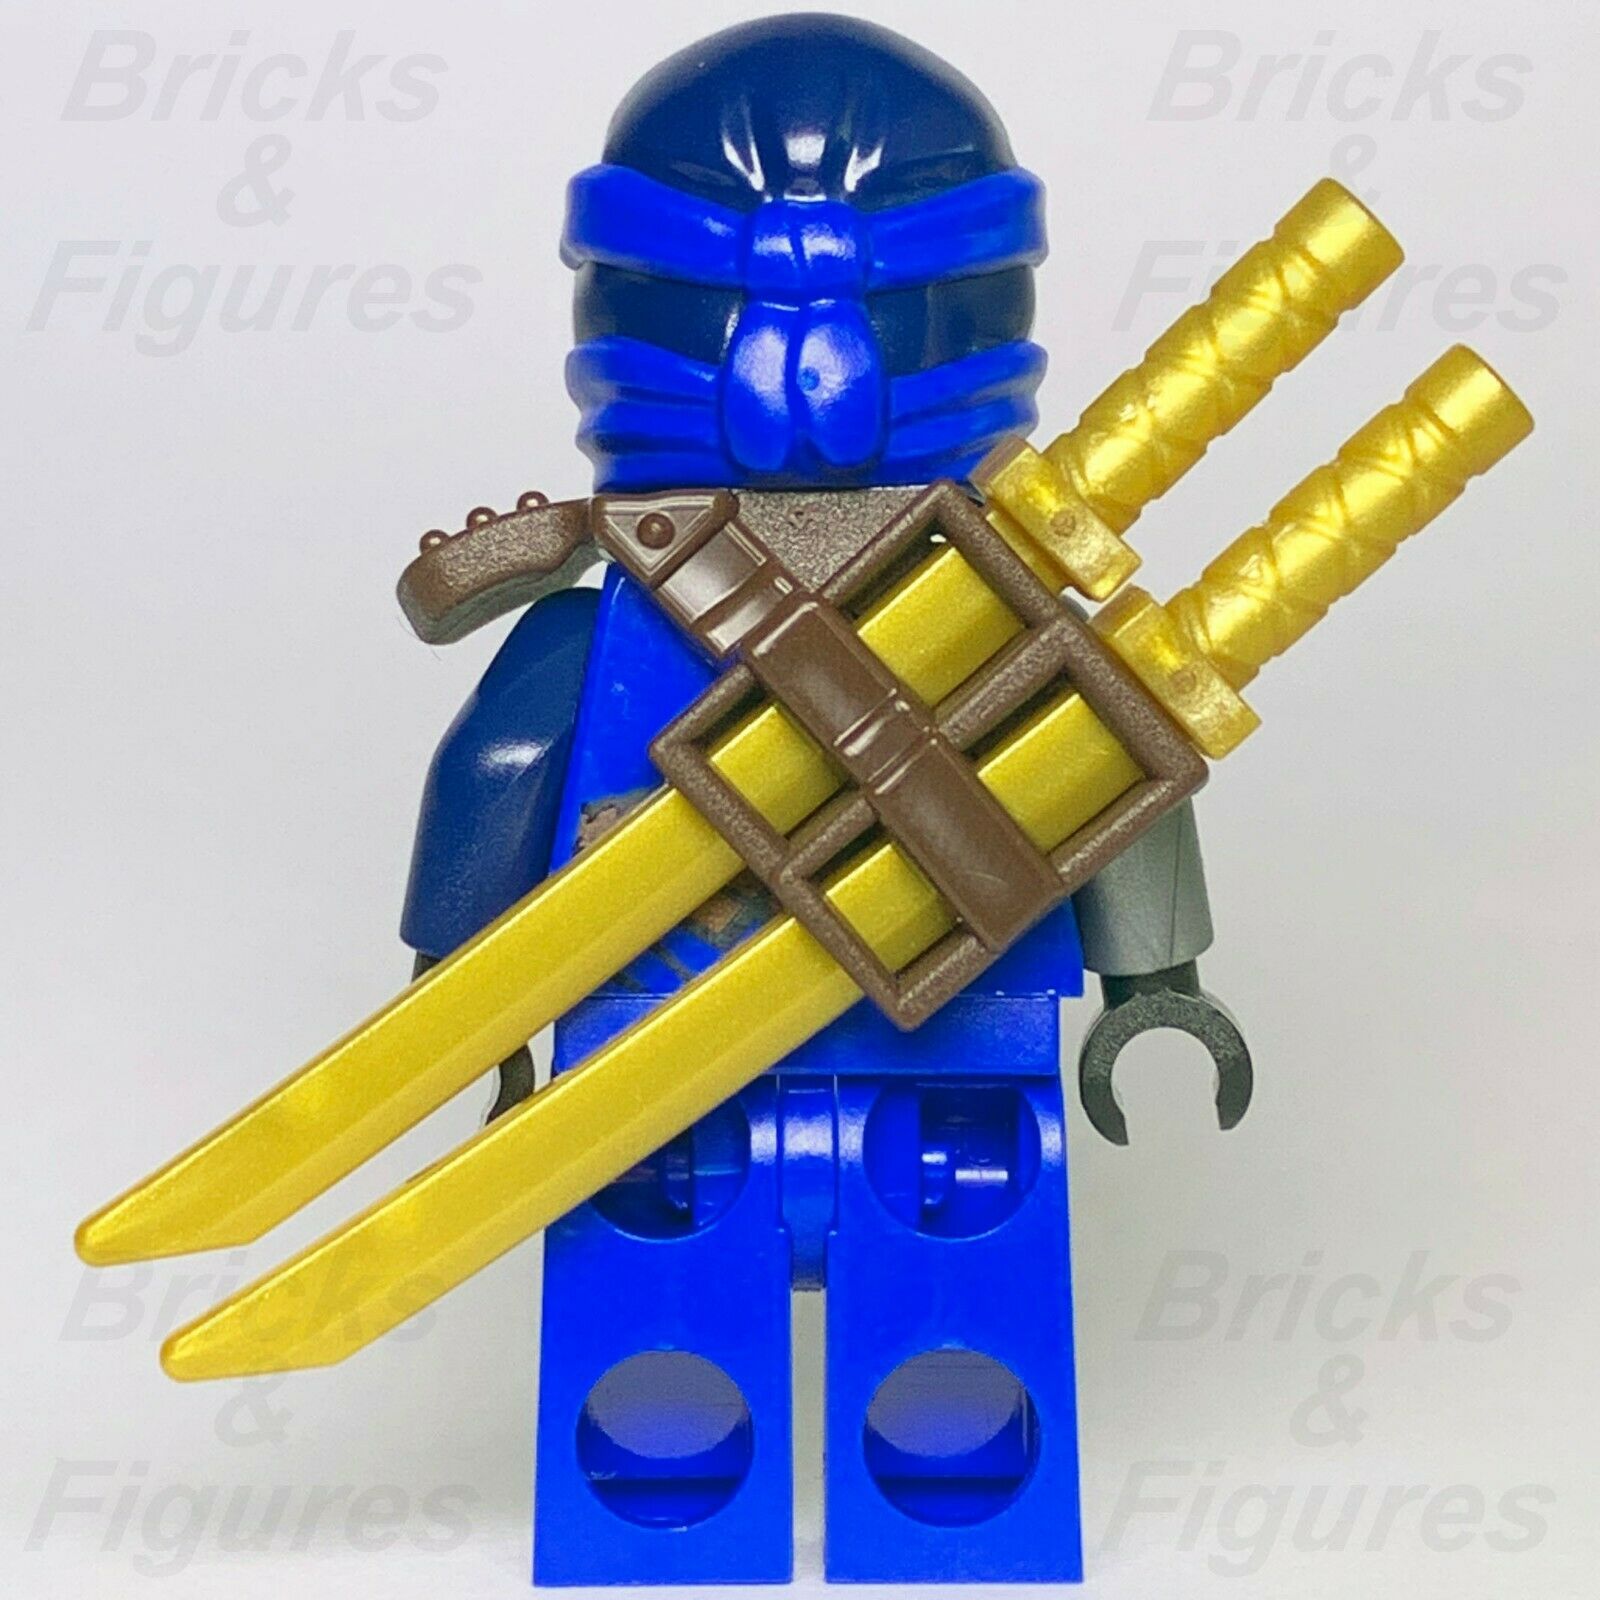 New Genuine Ninjago LEGO Ninja Jay Day of the Departed Minifigure 70595 - Bricks & Figures